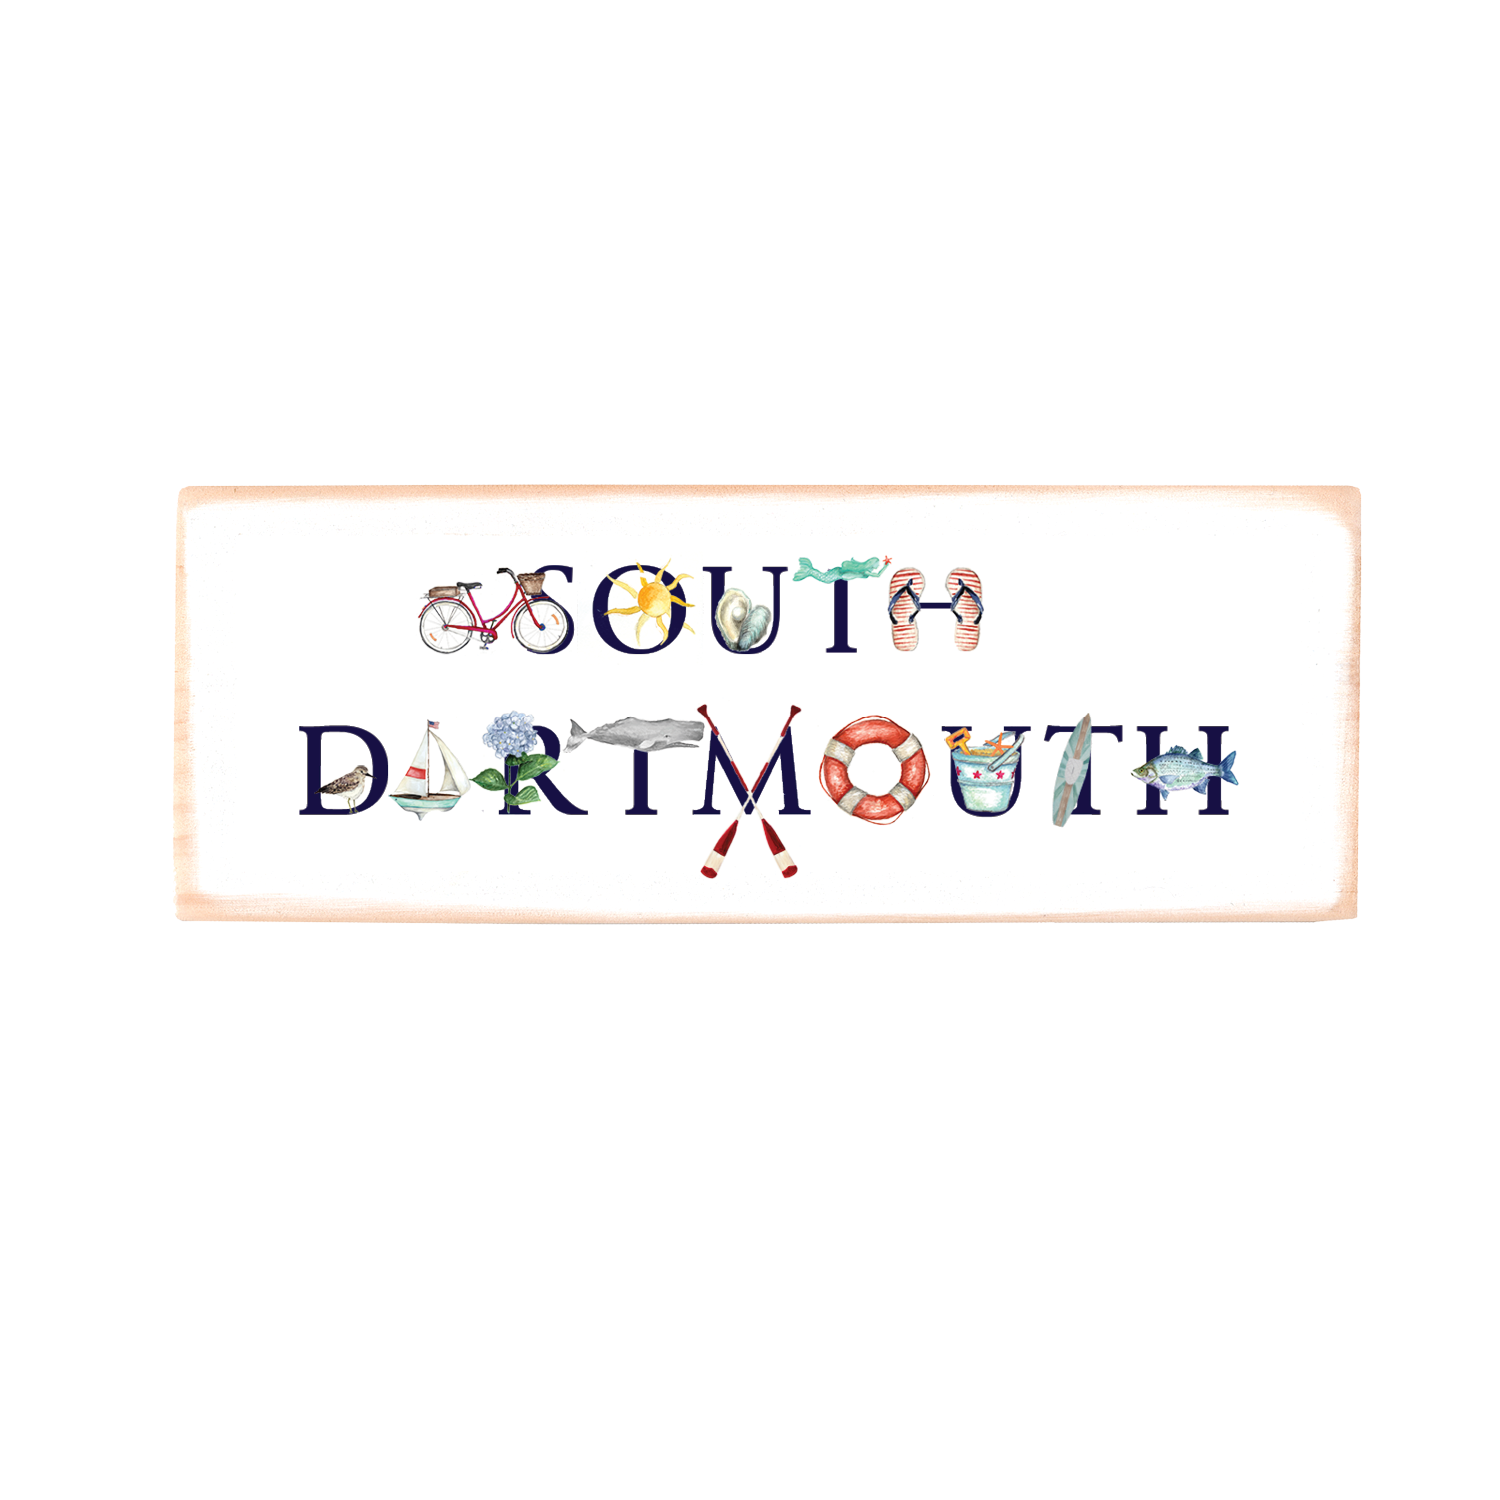 south dartmouth rectangle wood block